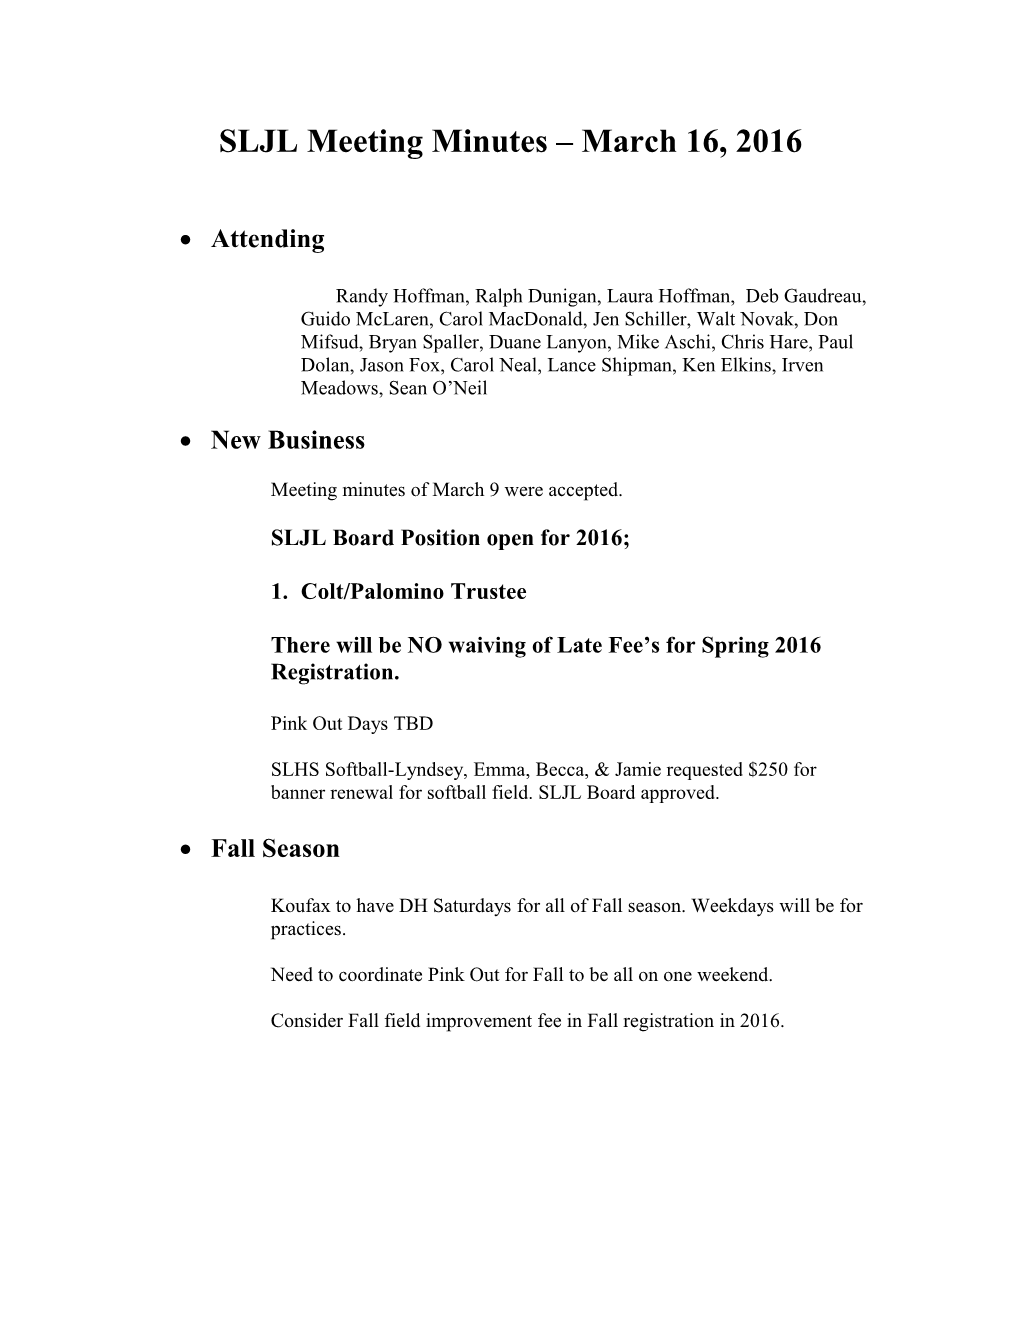 SLJL Meeting Minutes - November 4, 2009